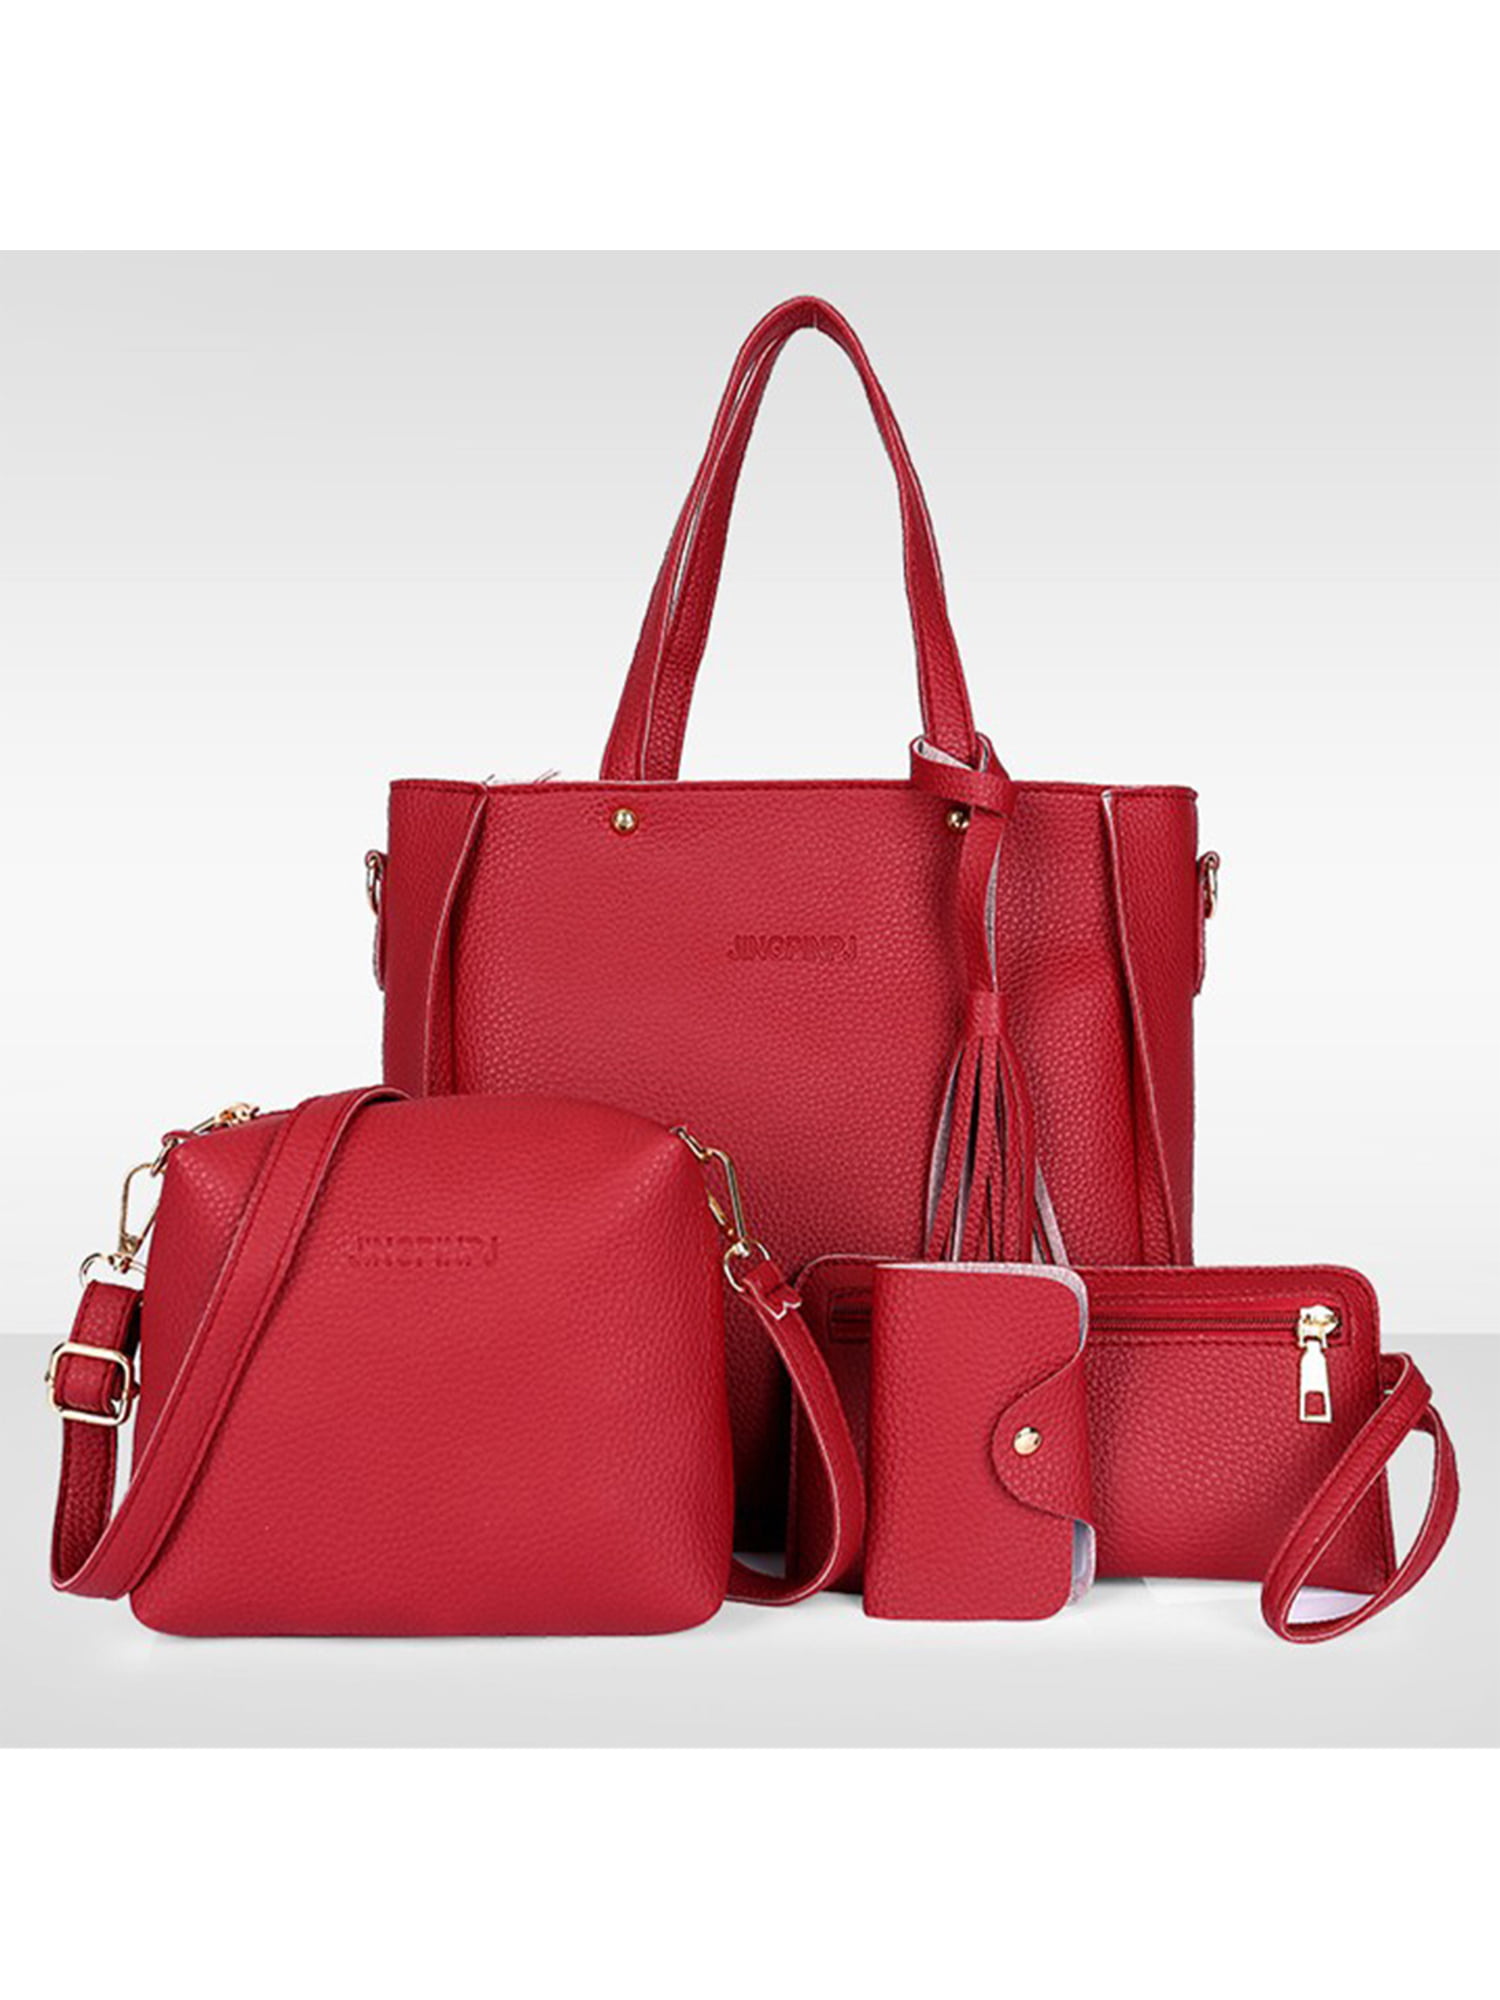 Luxsavane Bright Multi Women's Top Handle Bags